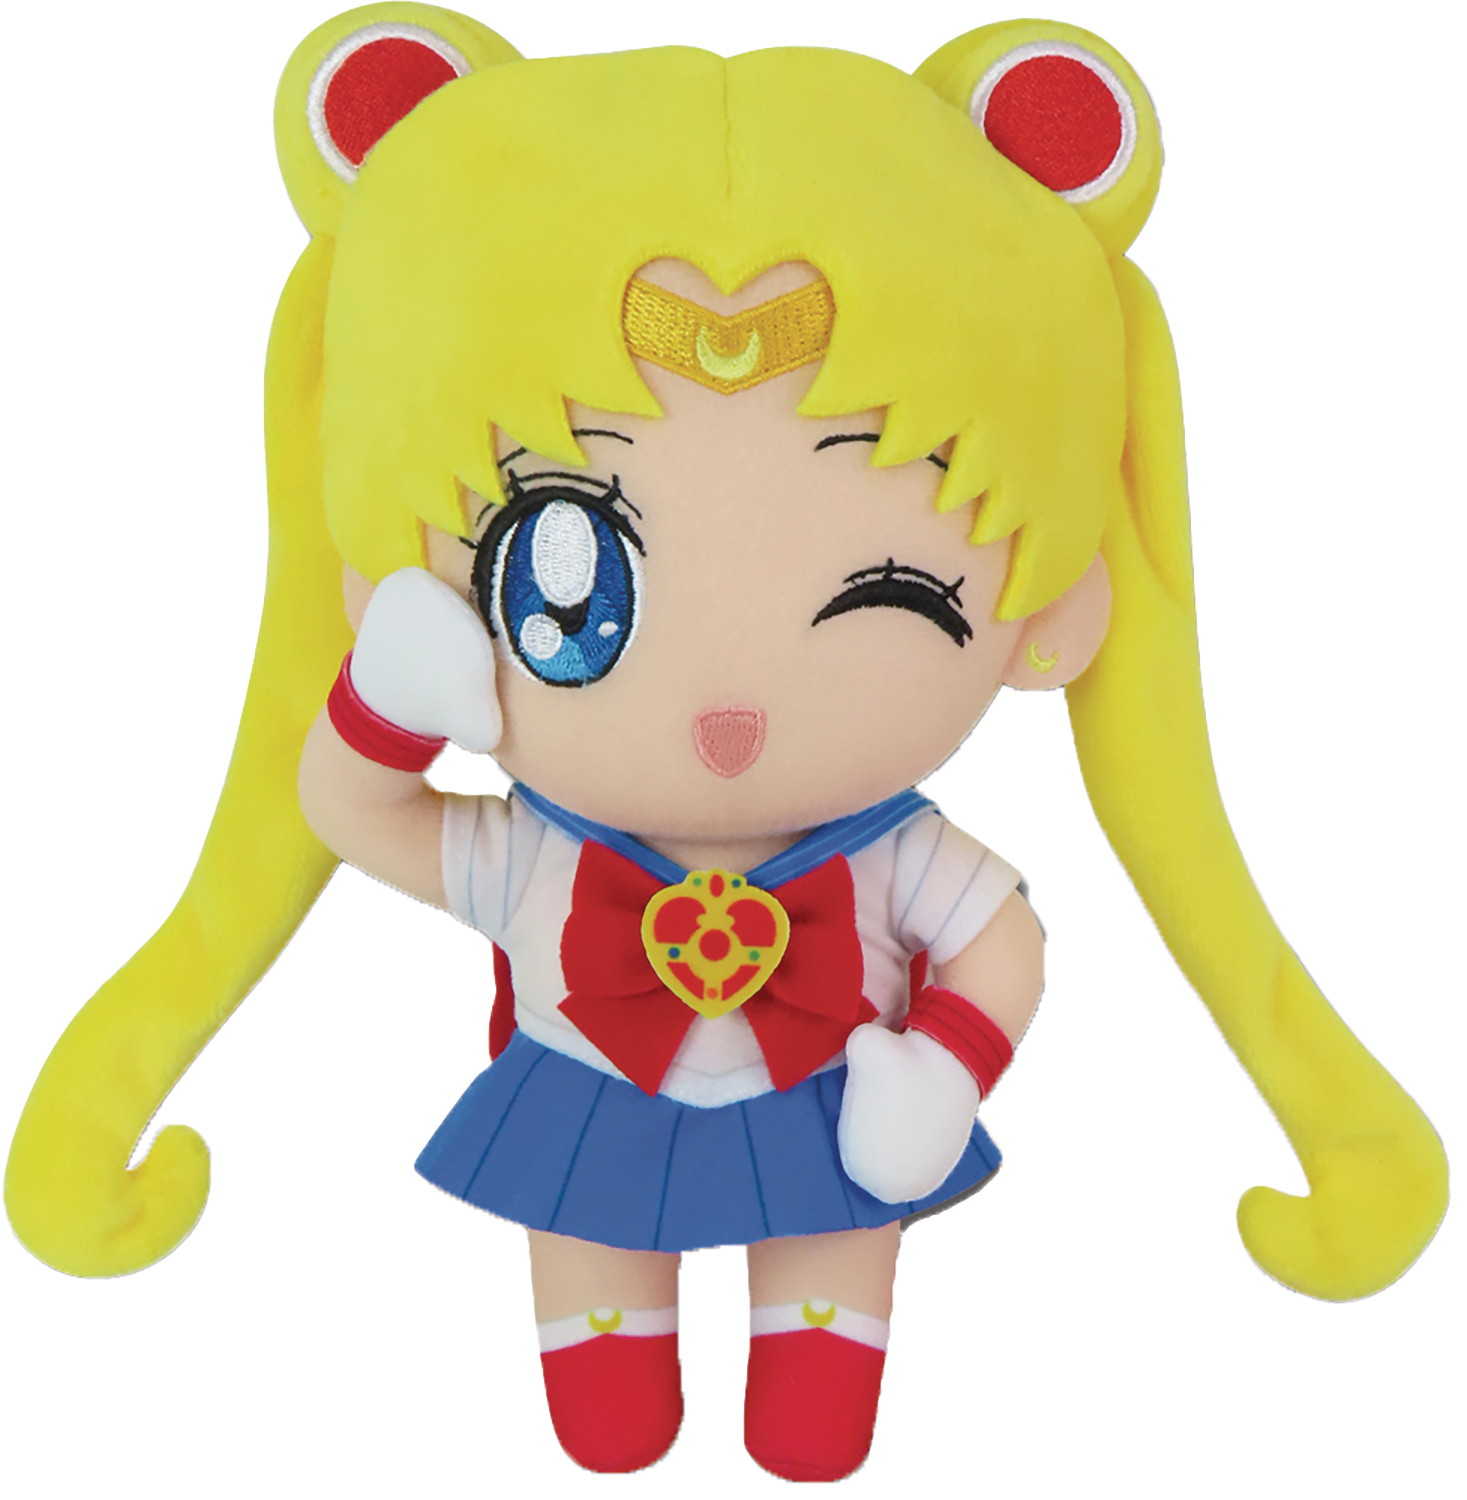 Sailor Moon S Chibi Sailor Moon 8in Plush